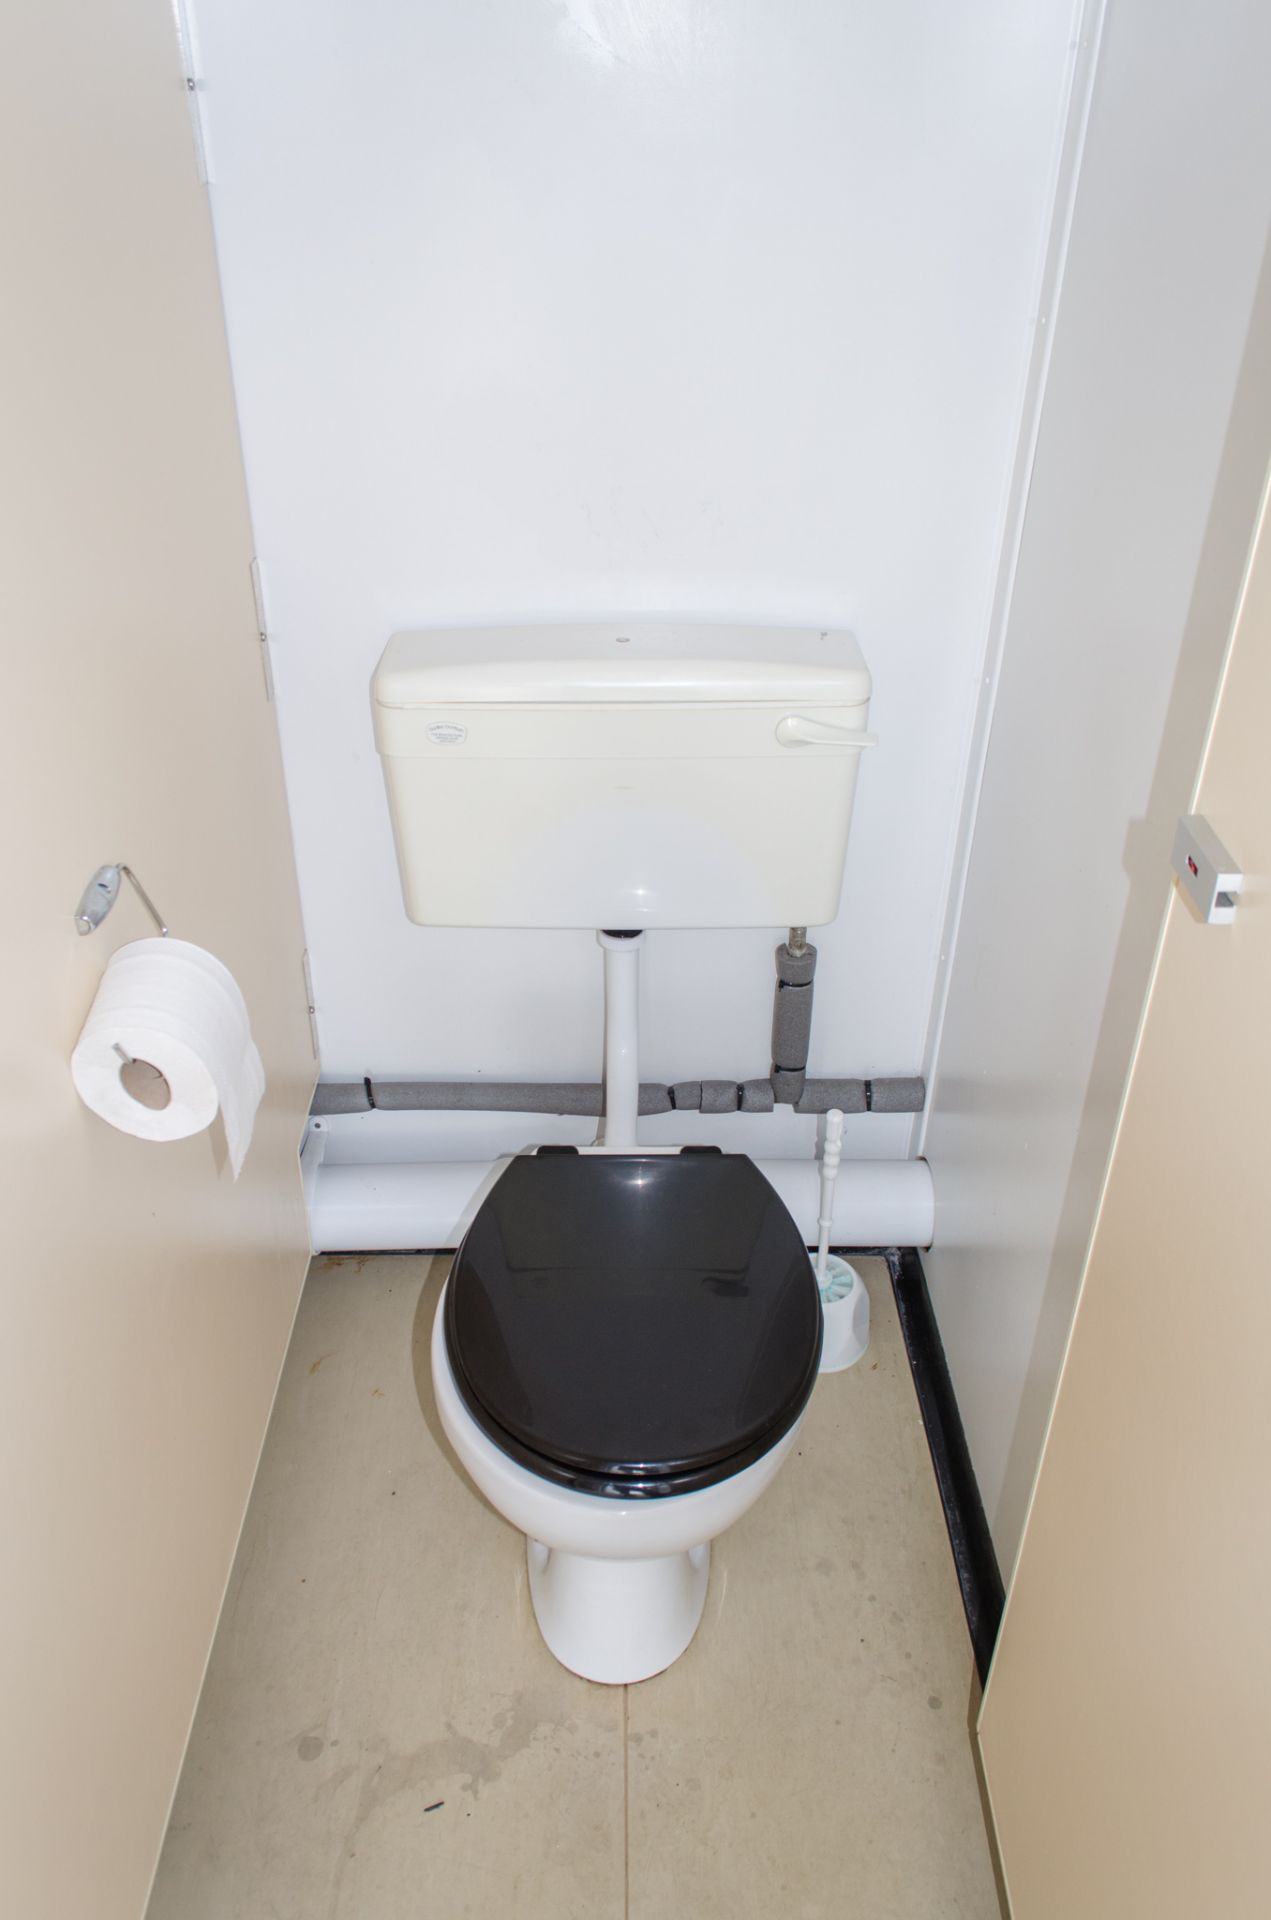 12 ft x 8 ft steel jack leg site 2+1 toilet site unit Comprising of: gents toilet (2 - urinals, - Image 8 of 9